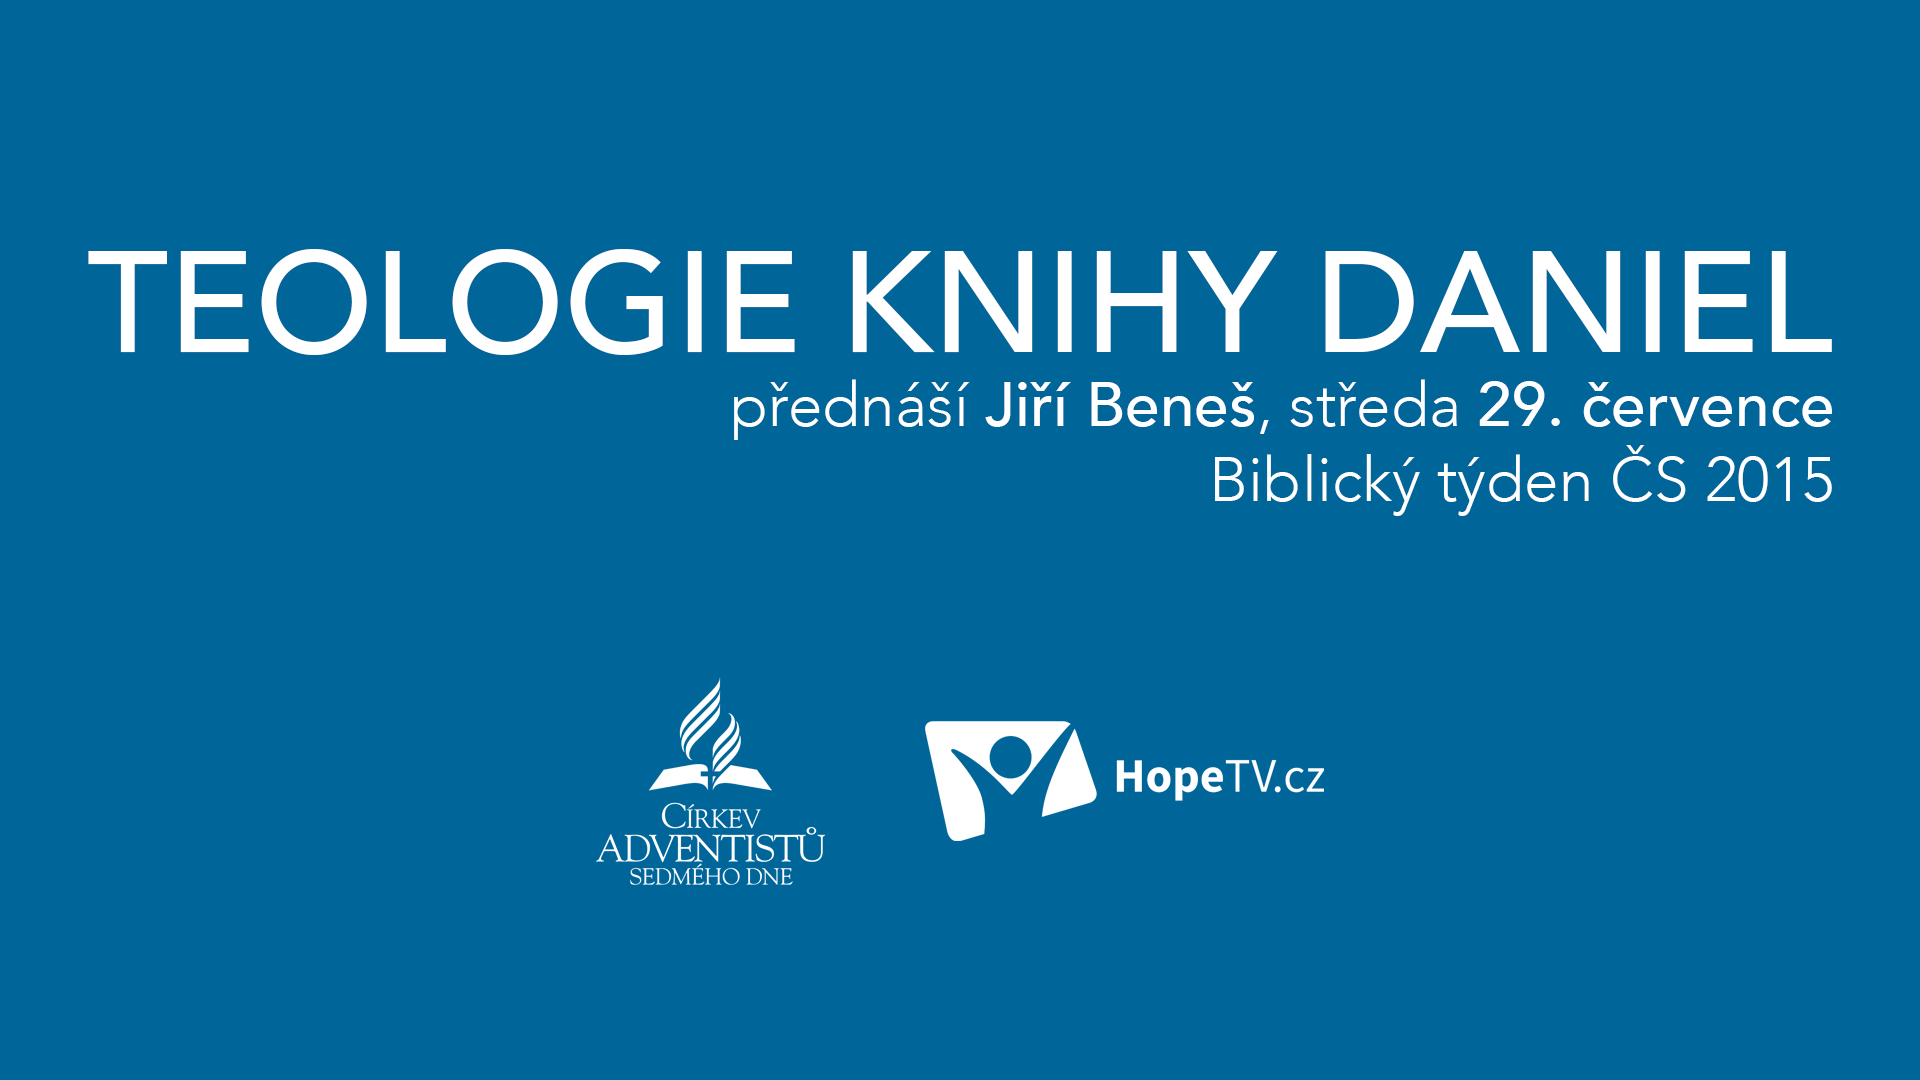 Teologie knihy Daniel - Jiří Beneš (4/9) (Biblický týden ČS 2015)